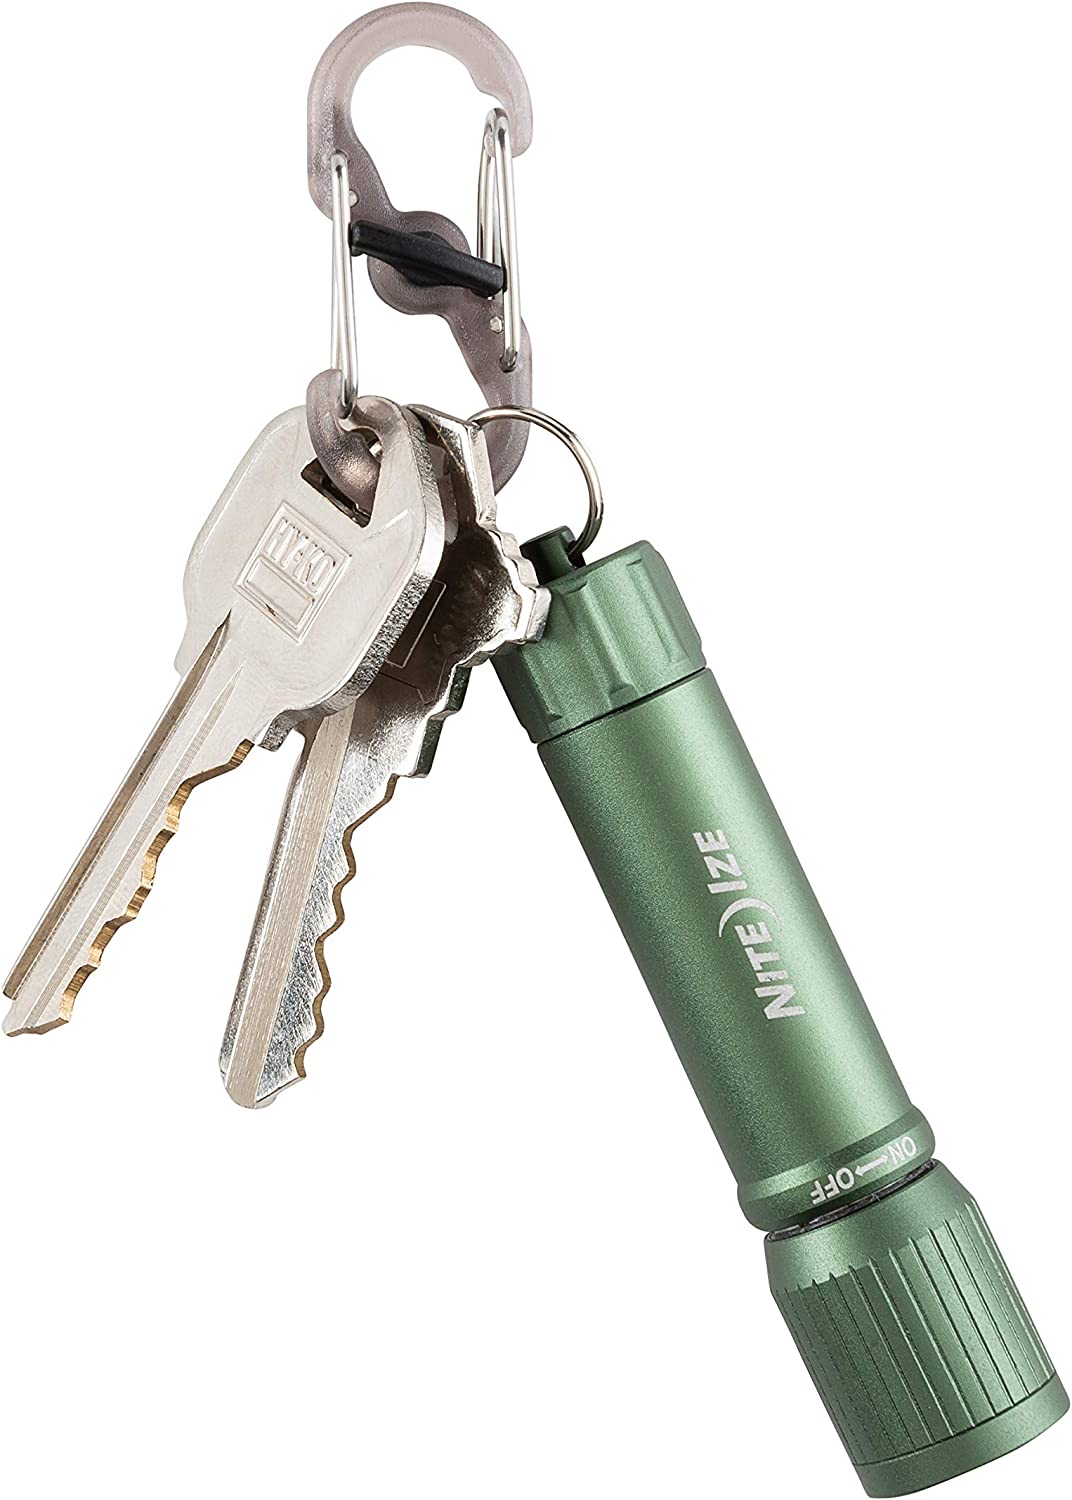 Amazon stocking stuffers for people who love cars flashlight keychain.jpg